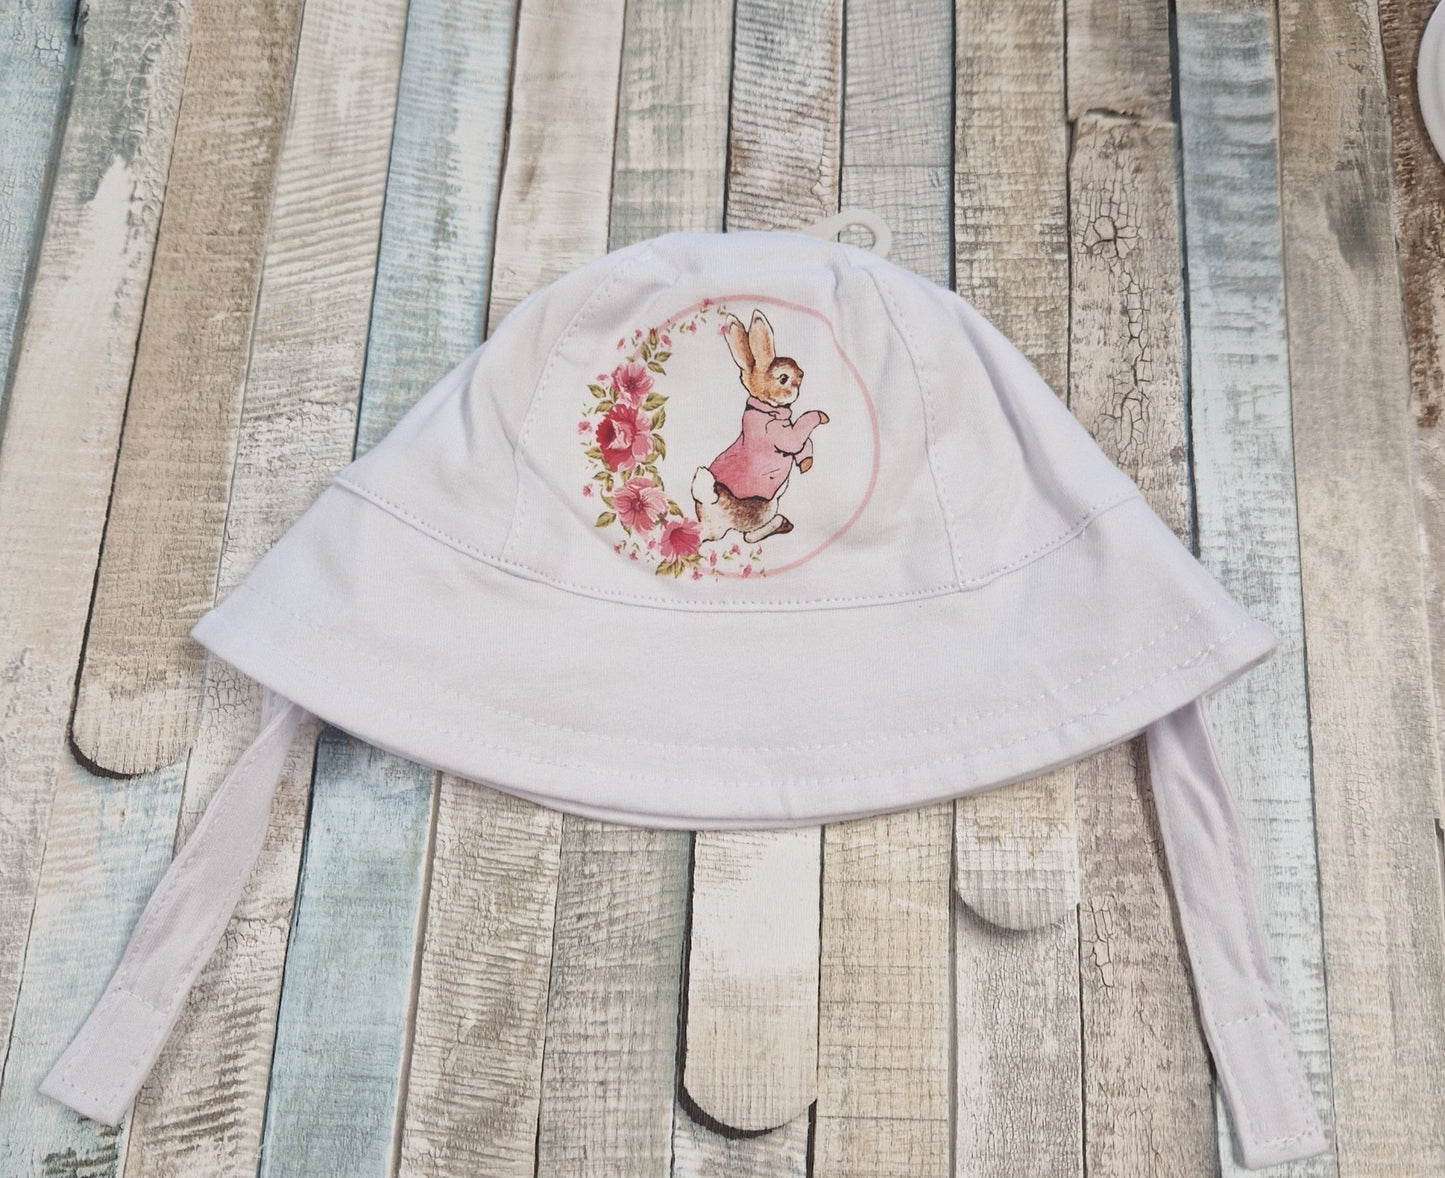 Baby Girls White Sunhat With Printed Pink Rabbit Design - Nana B Baby & Childrenswear Boutique